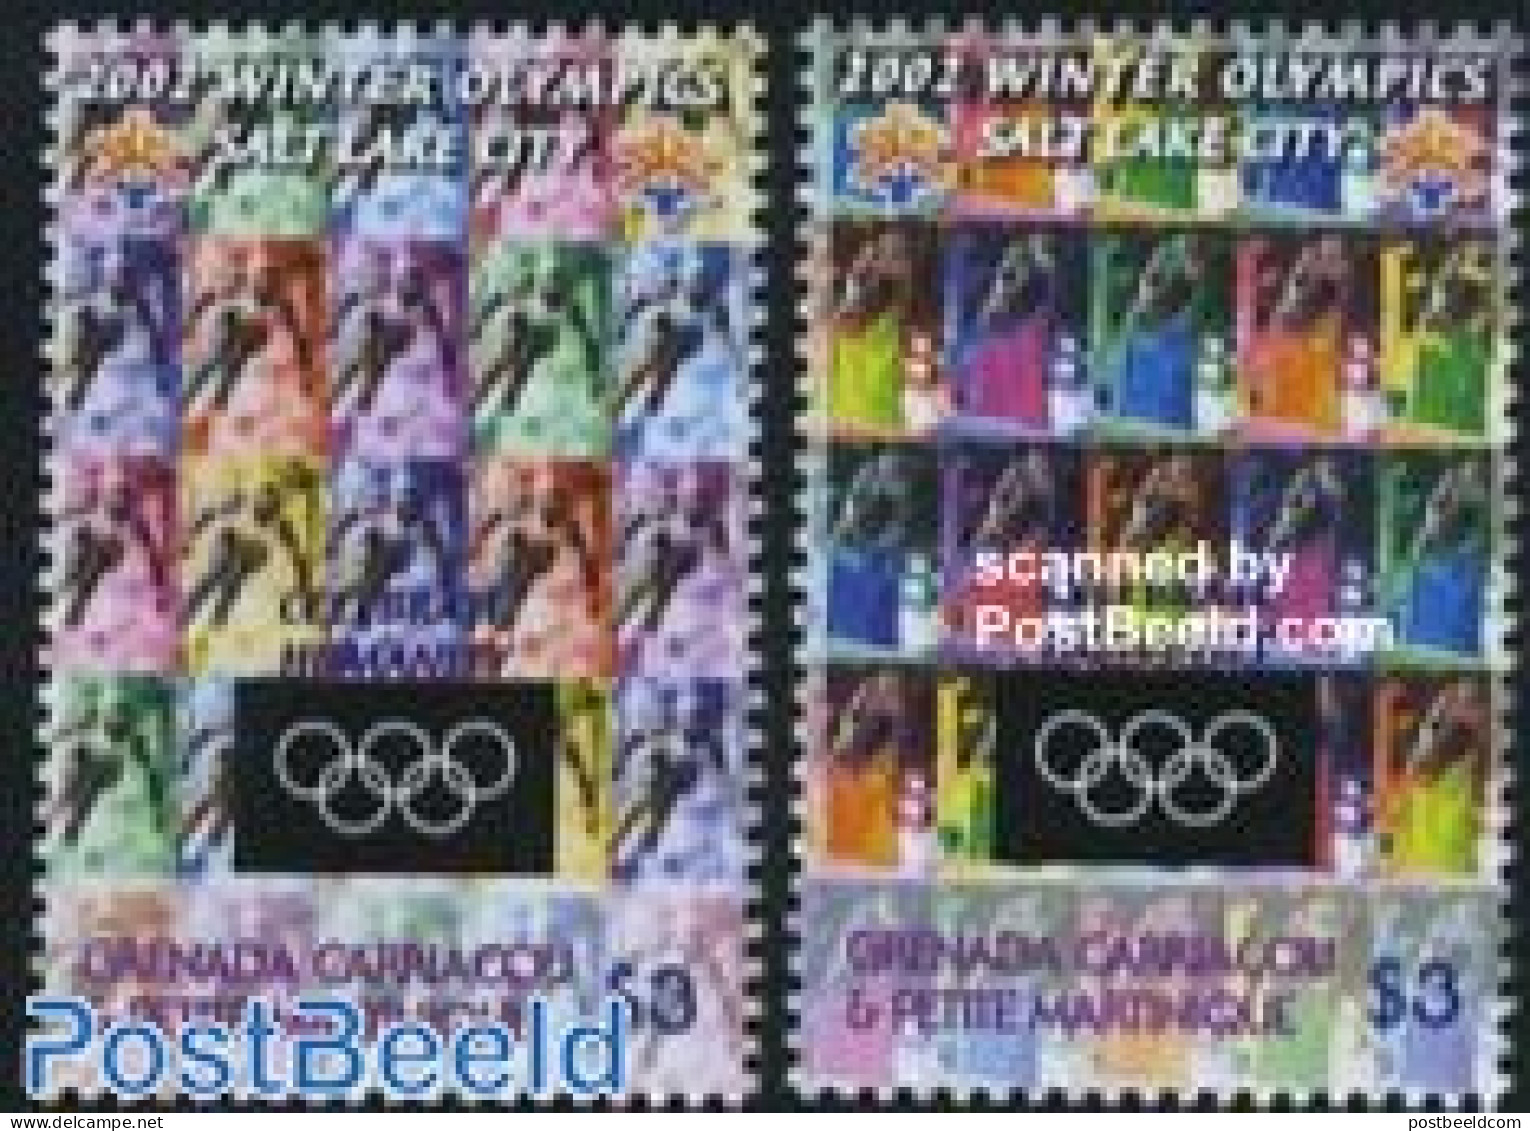 Grenada Grenadines 2002 Salt Lake City 2v, Mint NH, Sport - Olympic Winter Games - Skiing - Skiing